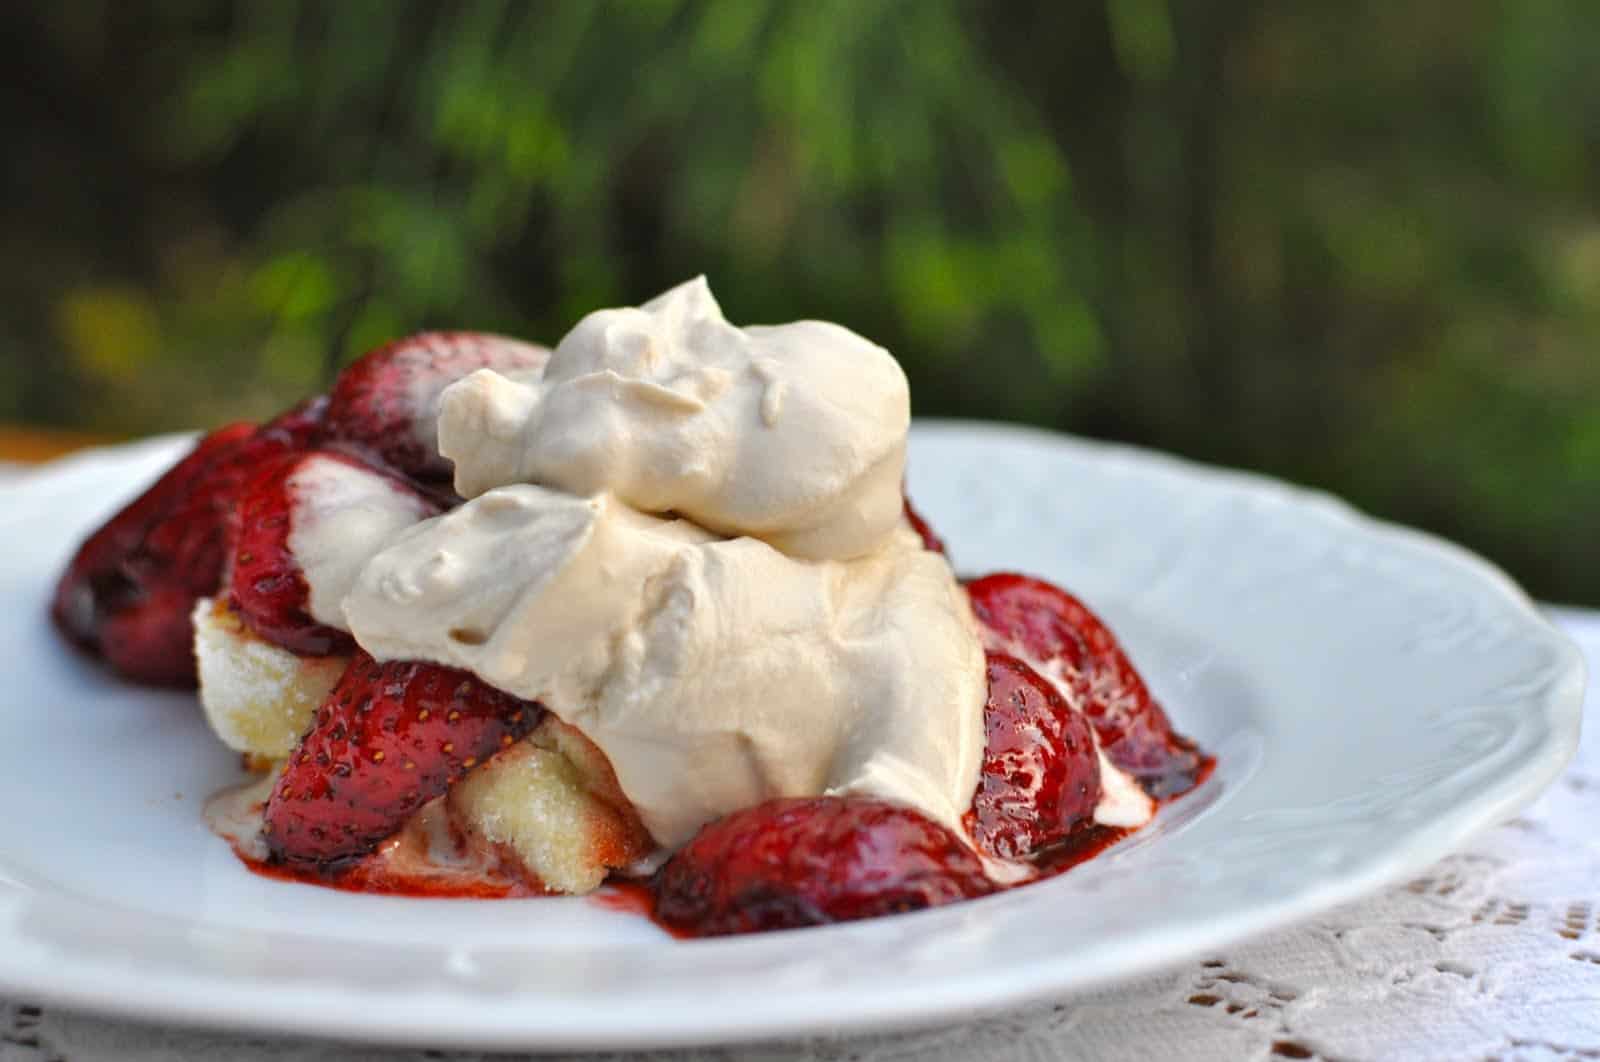 Pan-Roasted Balsamic Strawberries, Strawberry-Shortcake